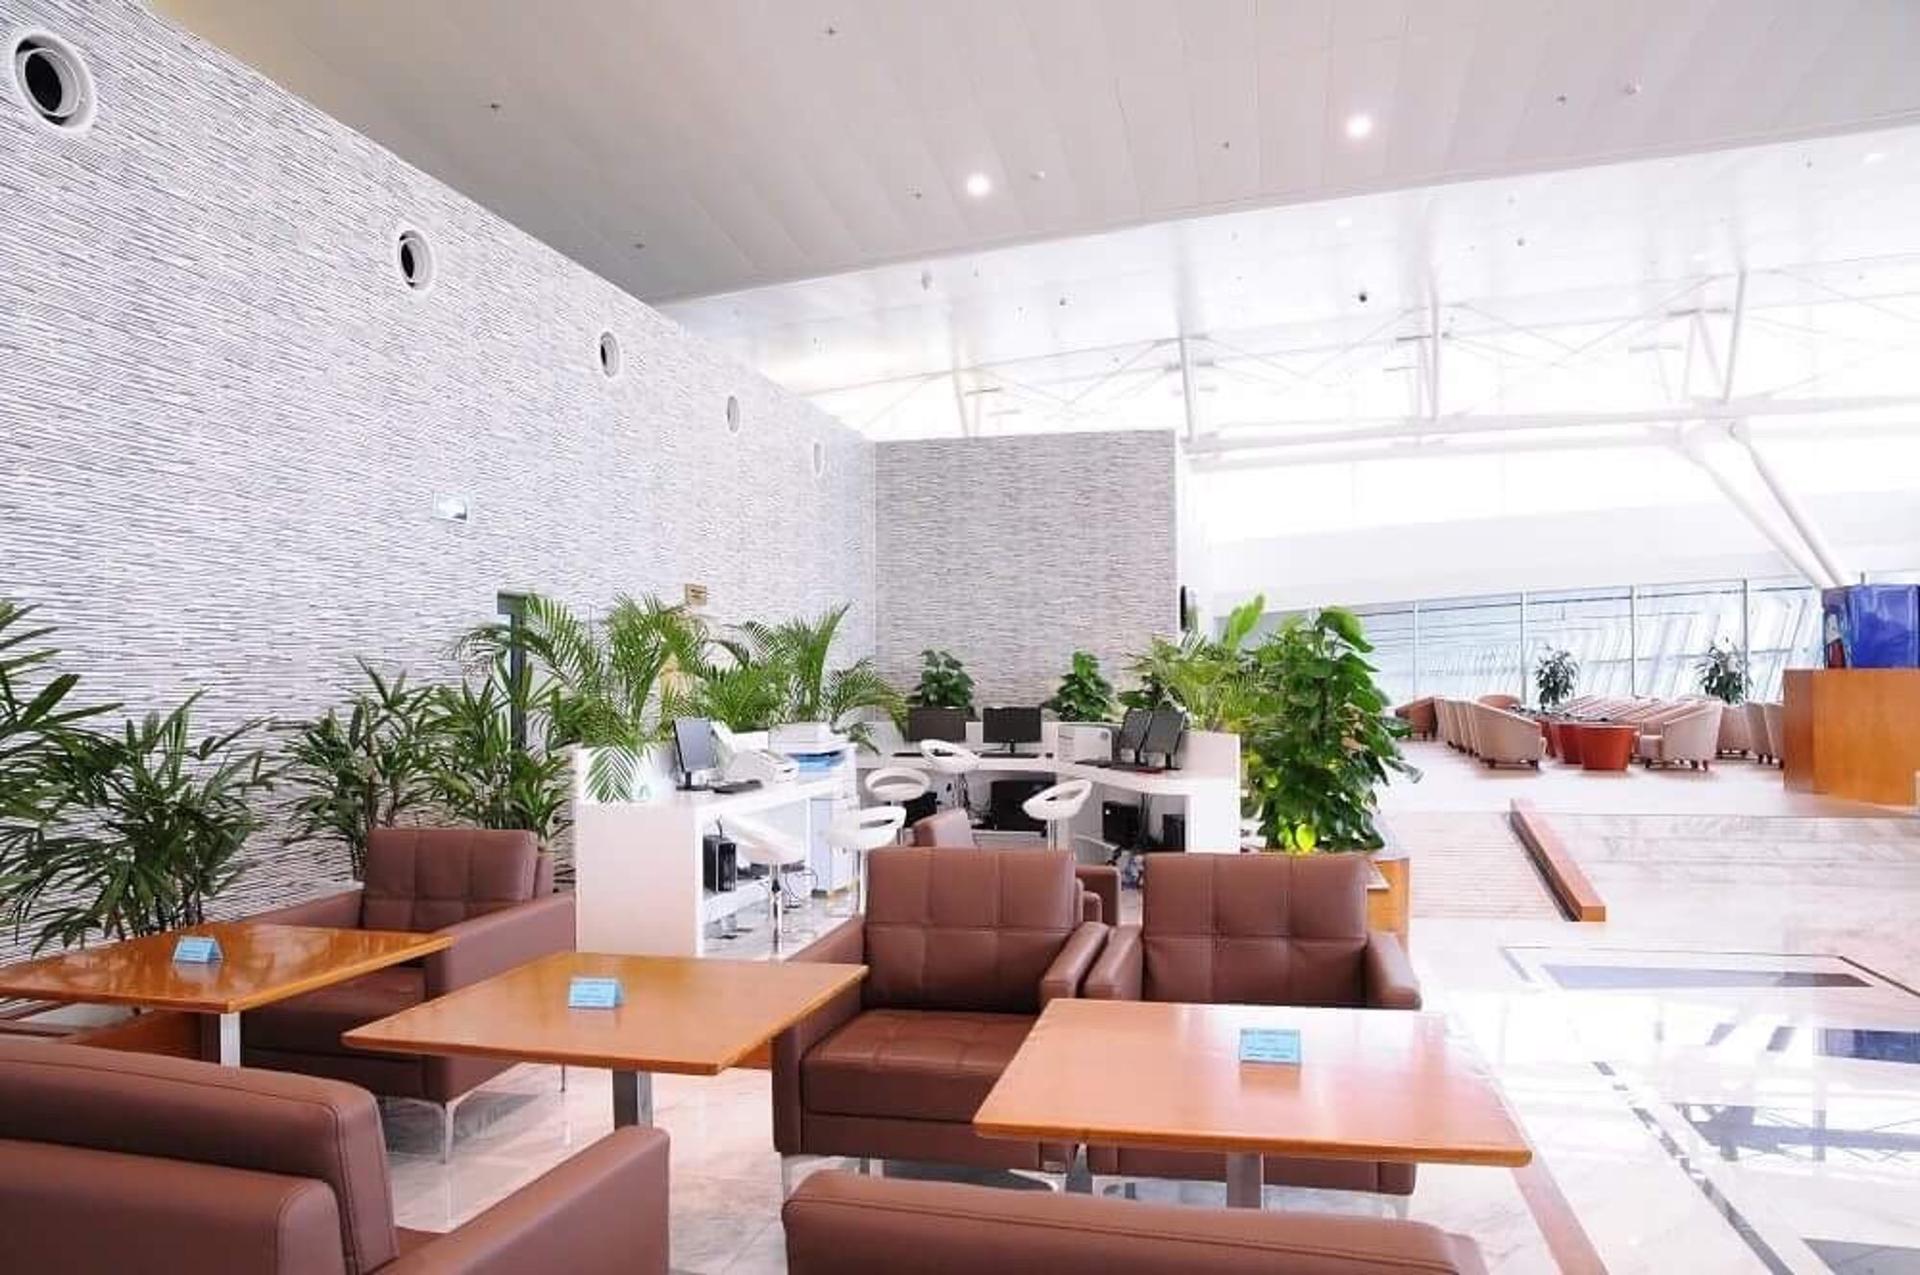 Noi Bai International Airport Business Lounge image 18 of 26